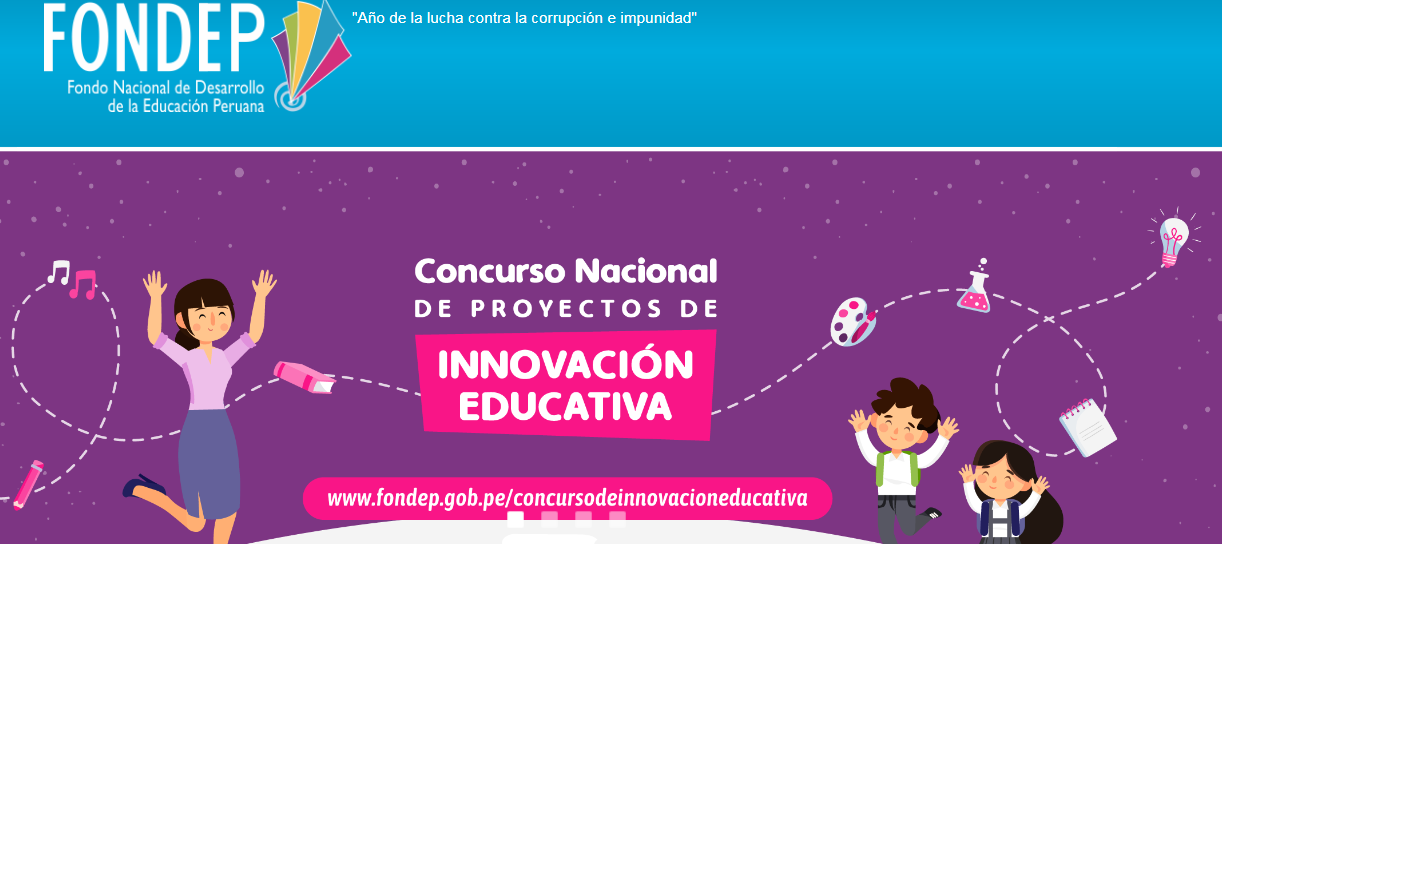 CONCURSO NACIONAL DE PROYECTOS DE INNOVACION EDUCATIVA